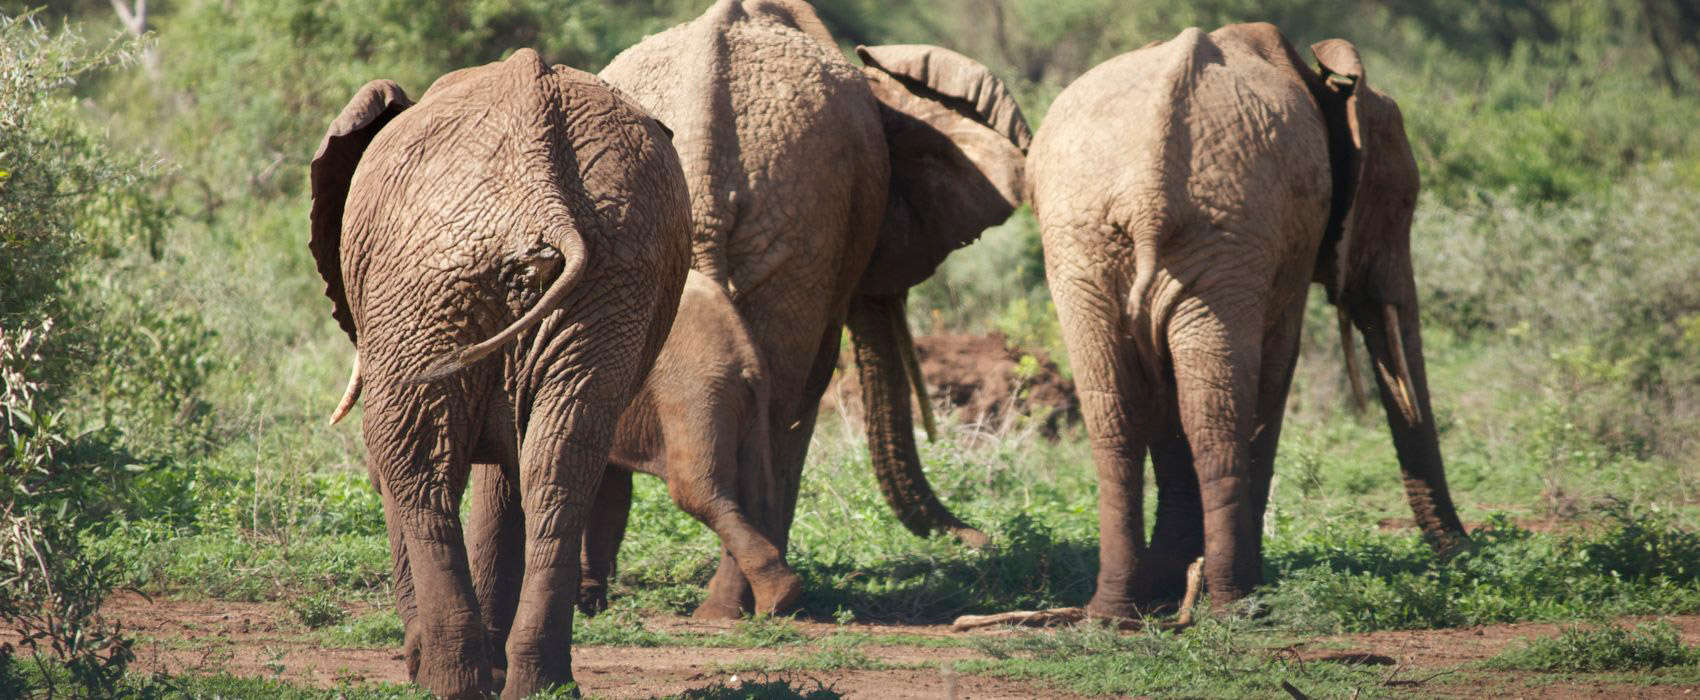 African Lake Manyara National Park Safari elephant